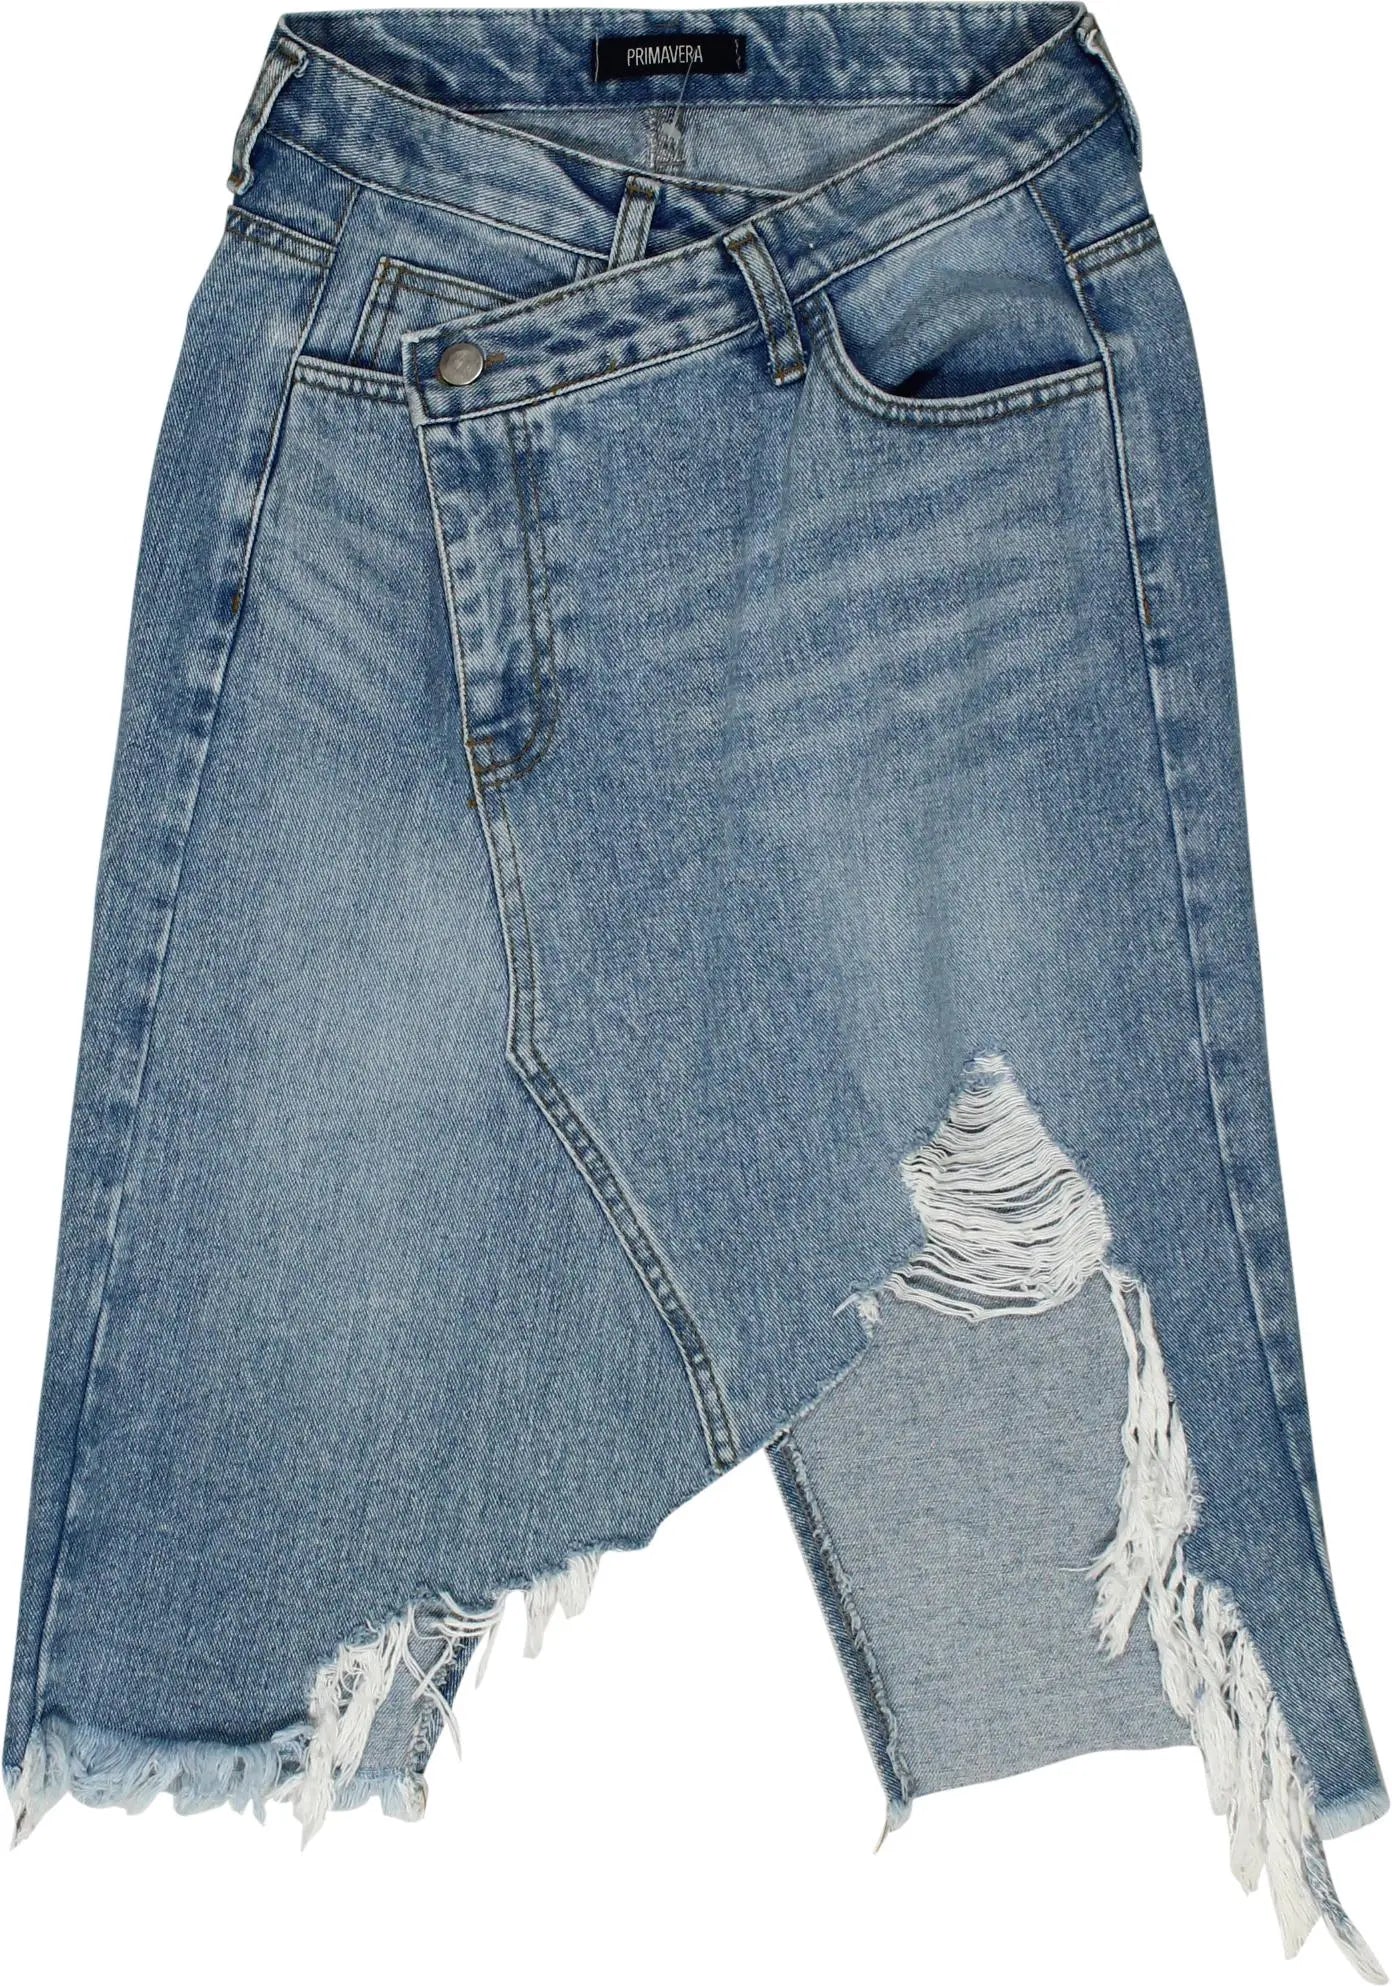 Primavera - Denim Skirt- ThriftTale.com - Vintage and second handclothing